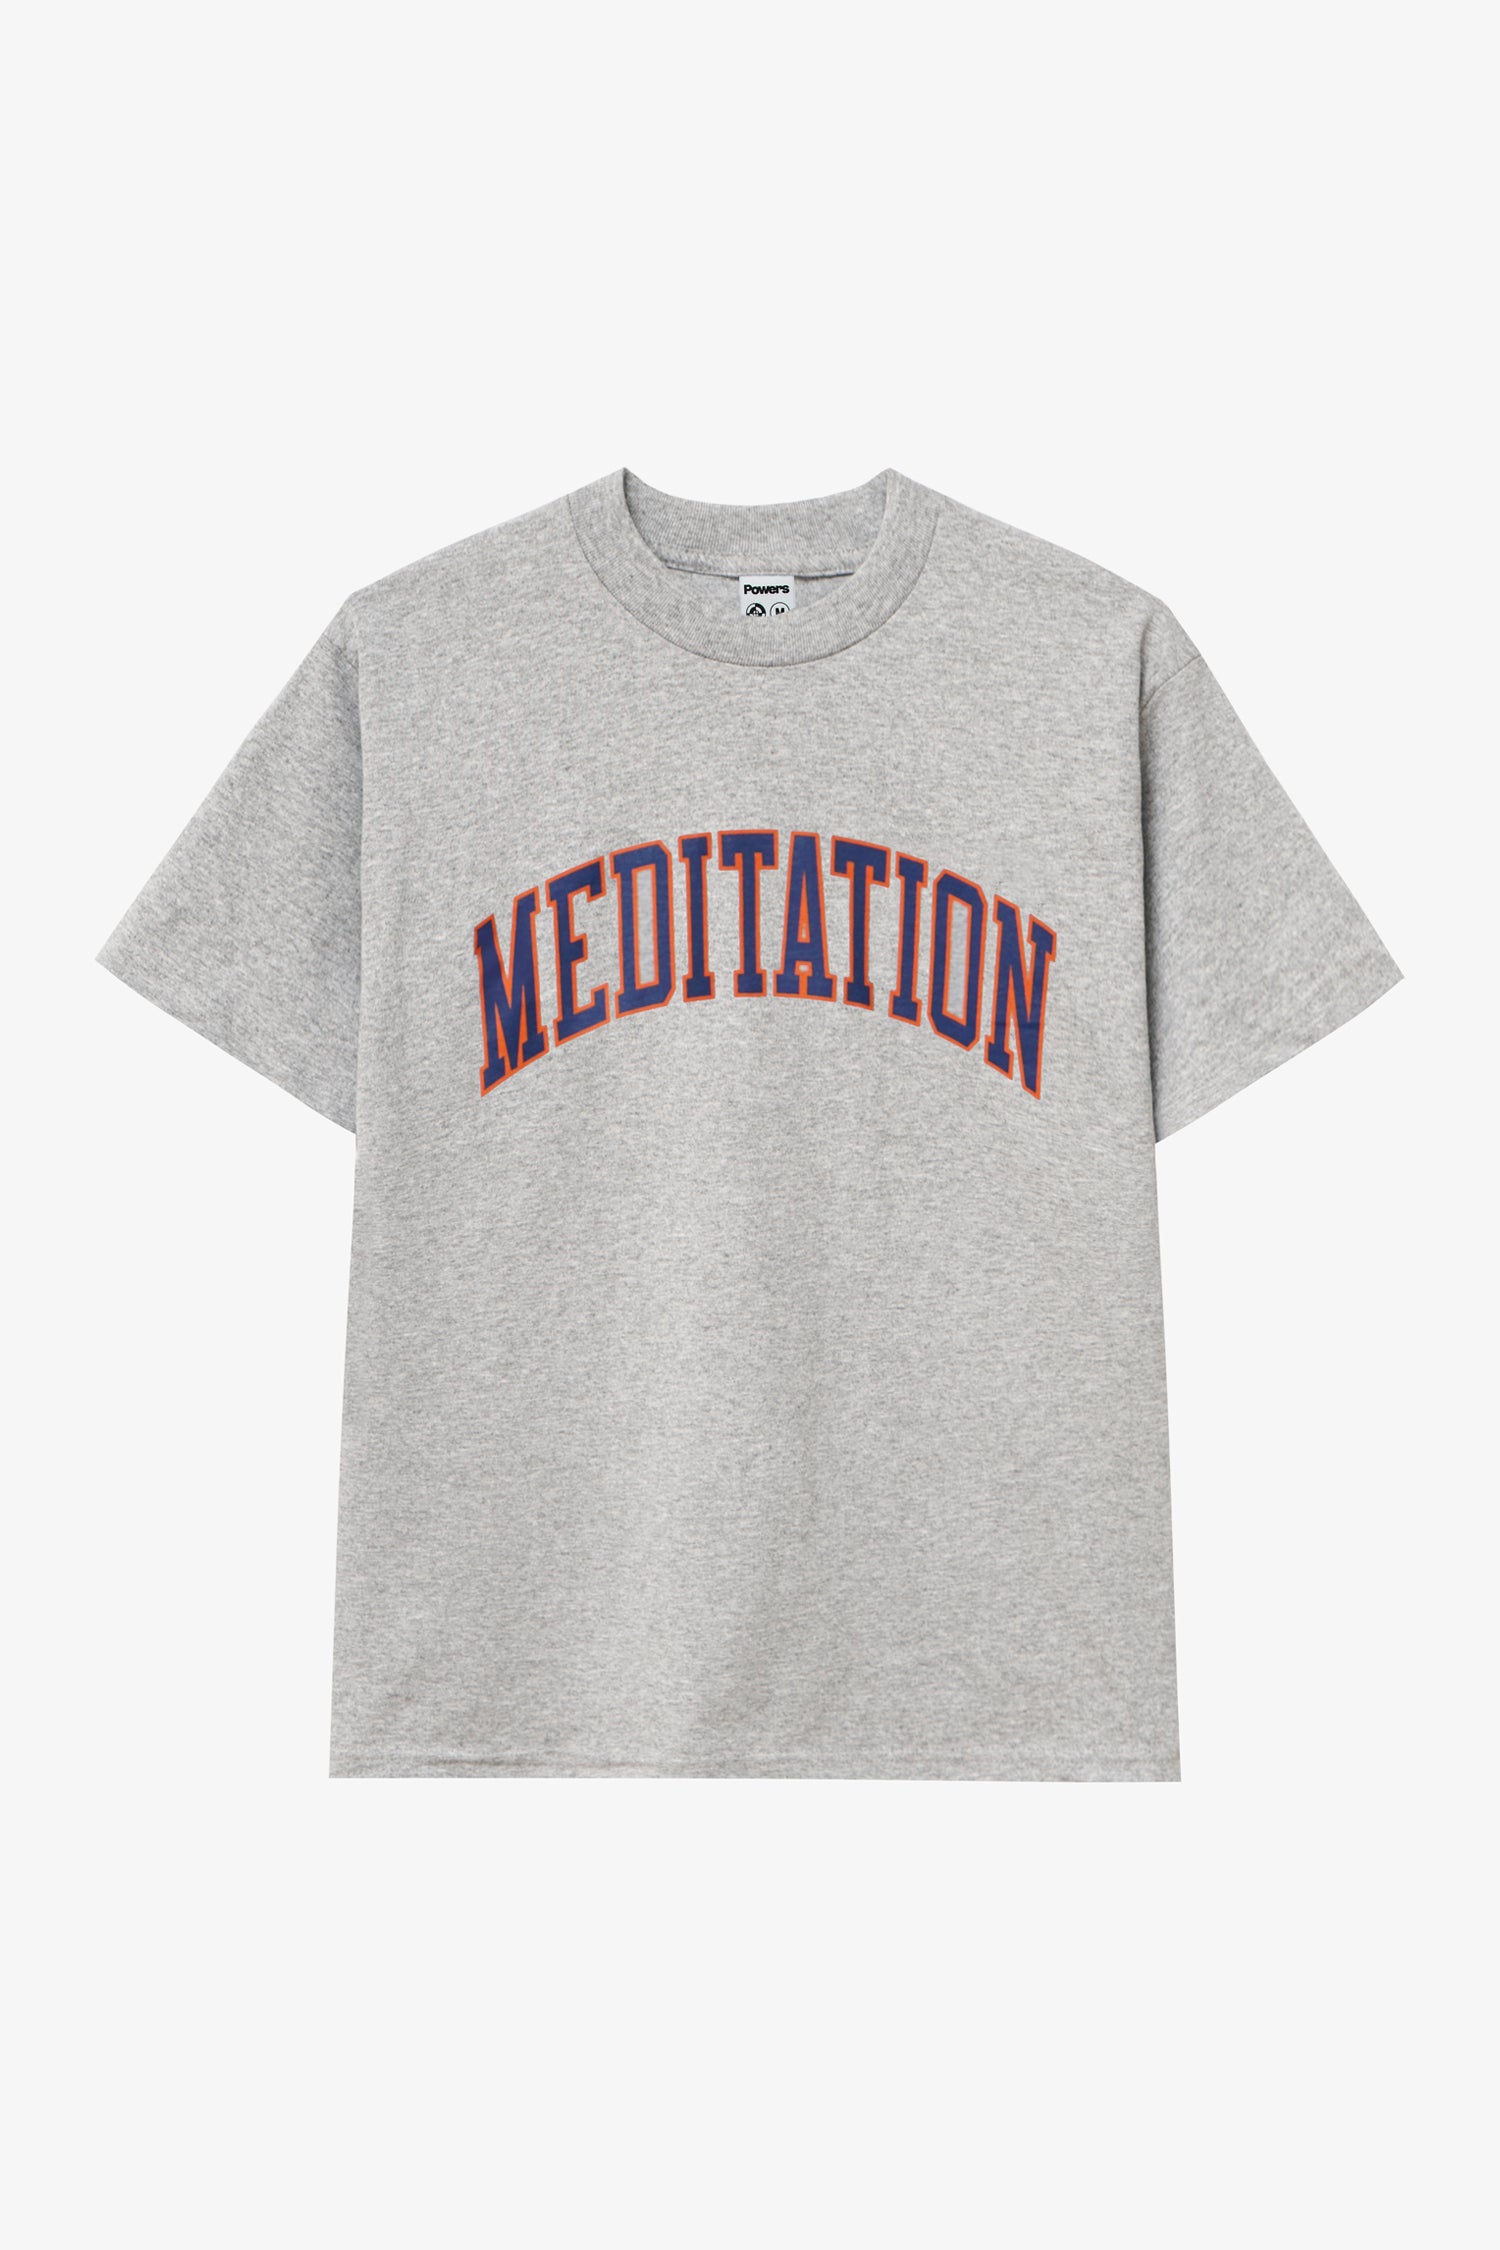 Selectshop FRAME - POWERS SUPPLY Meditation Tee T-Shirts Dubai